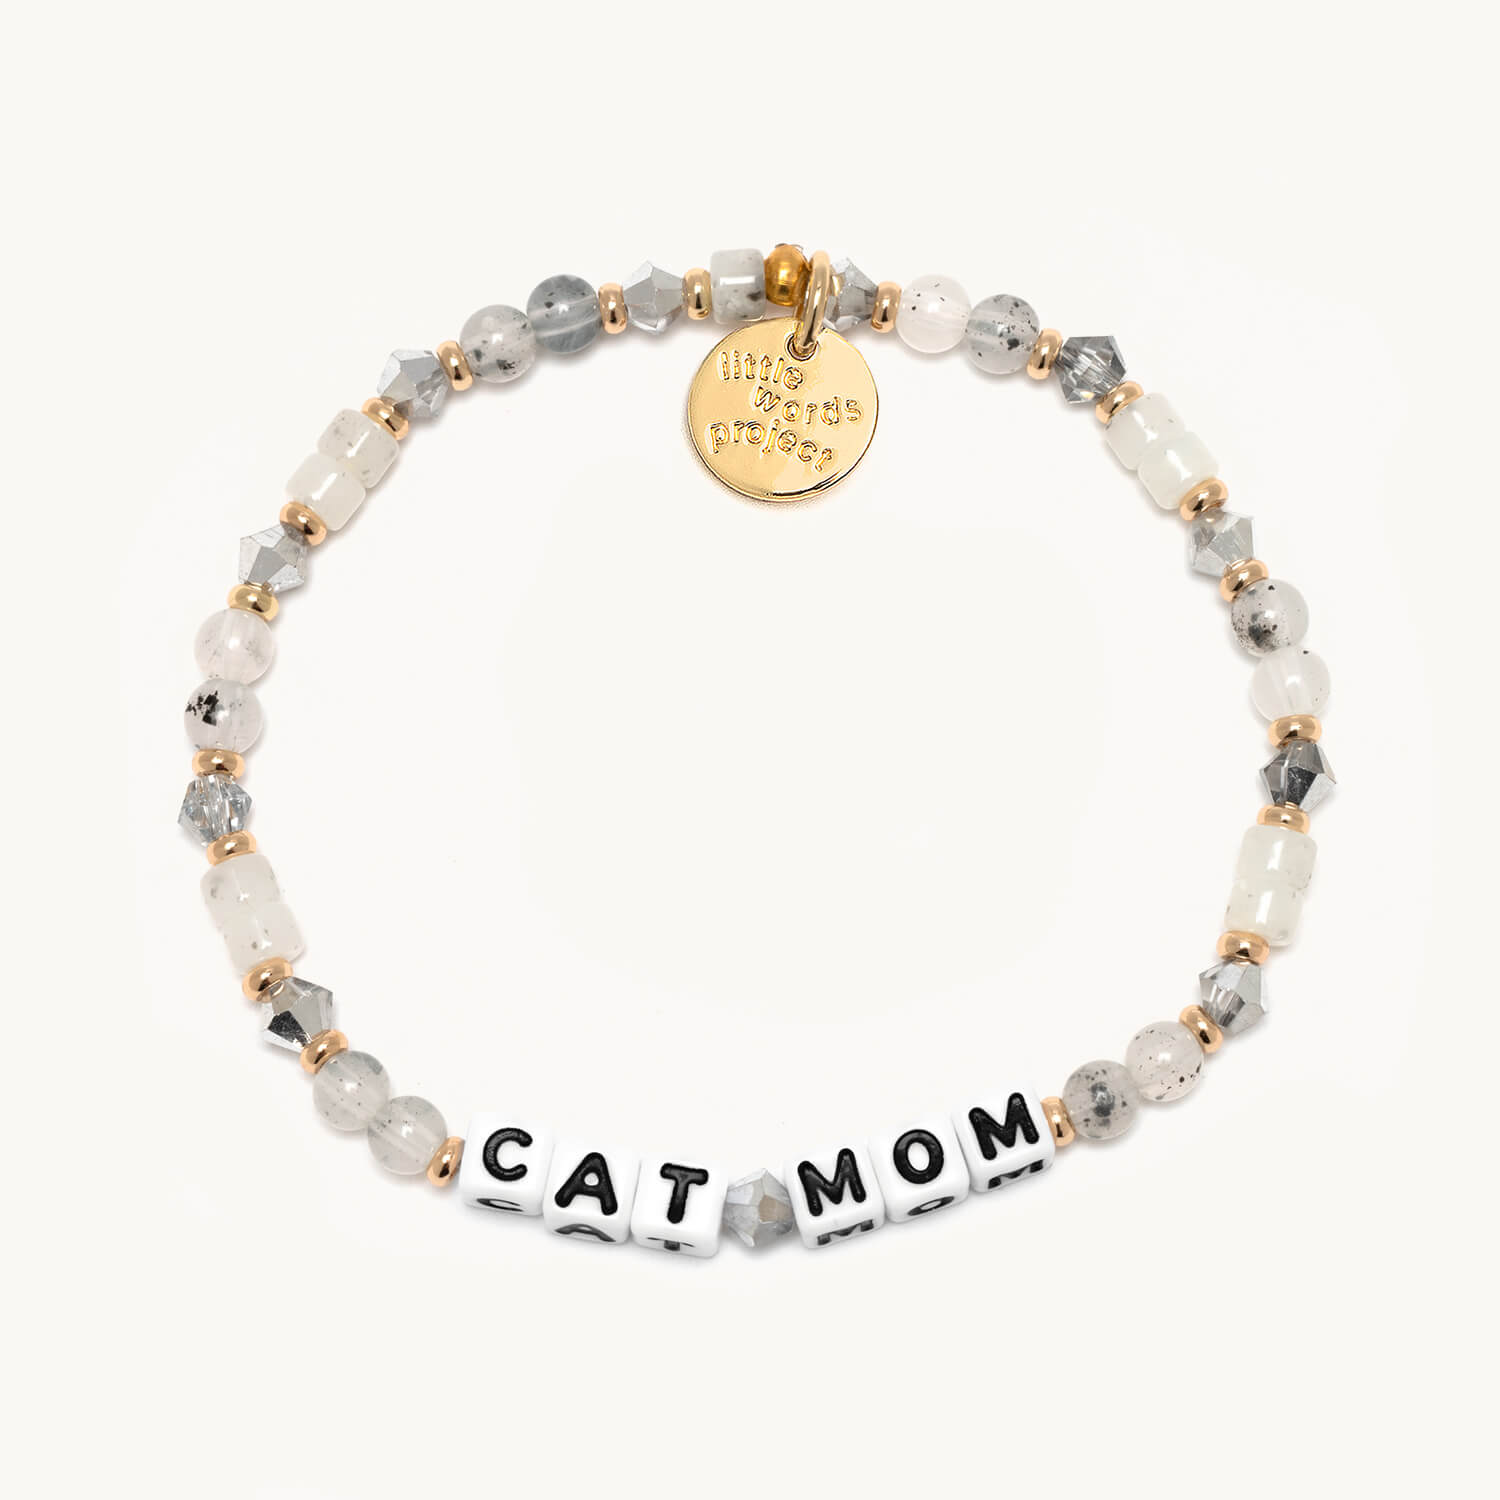 Cat Mom- Little Words Project Bracelet